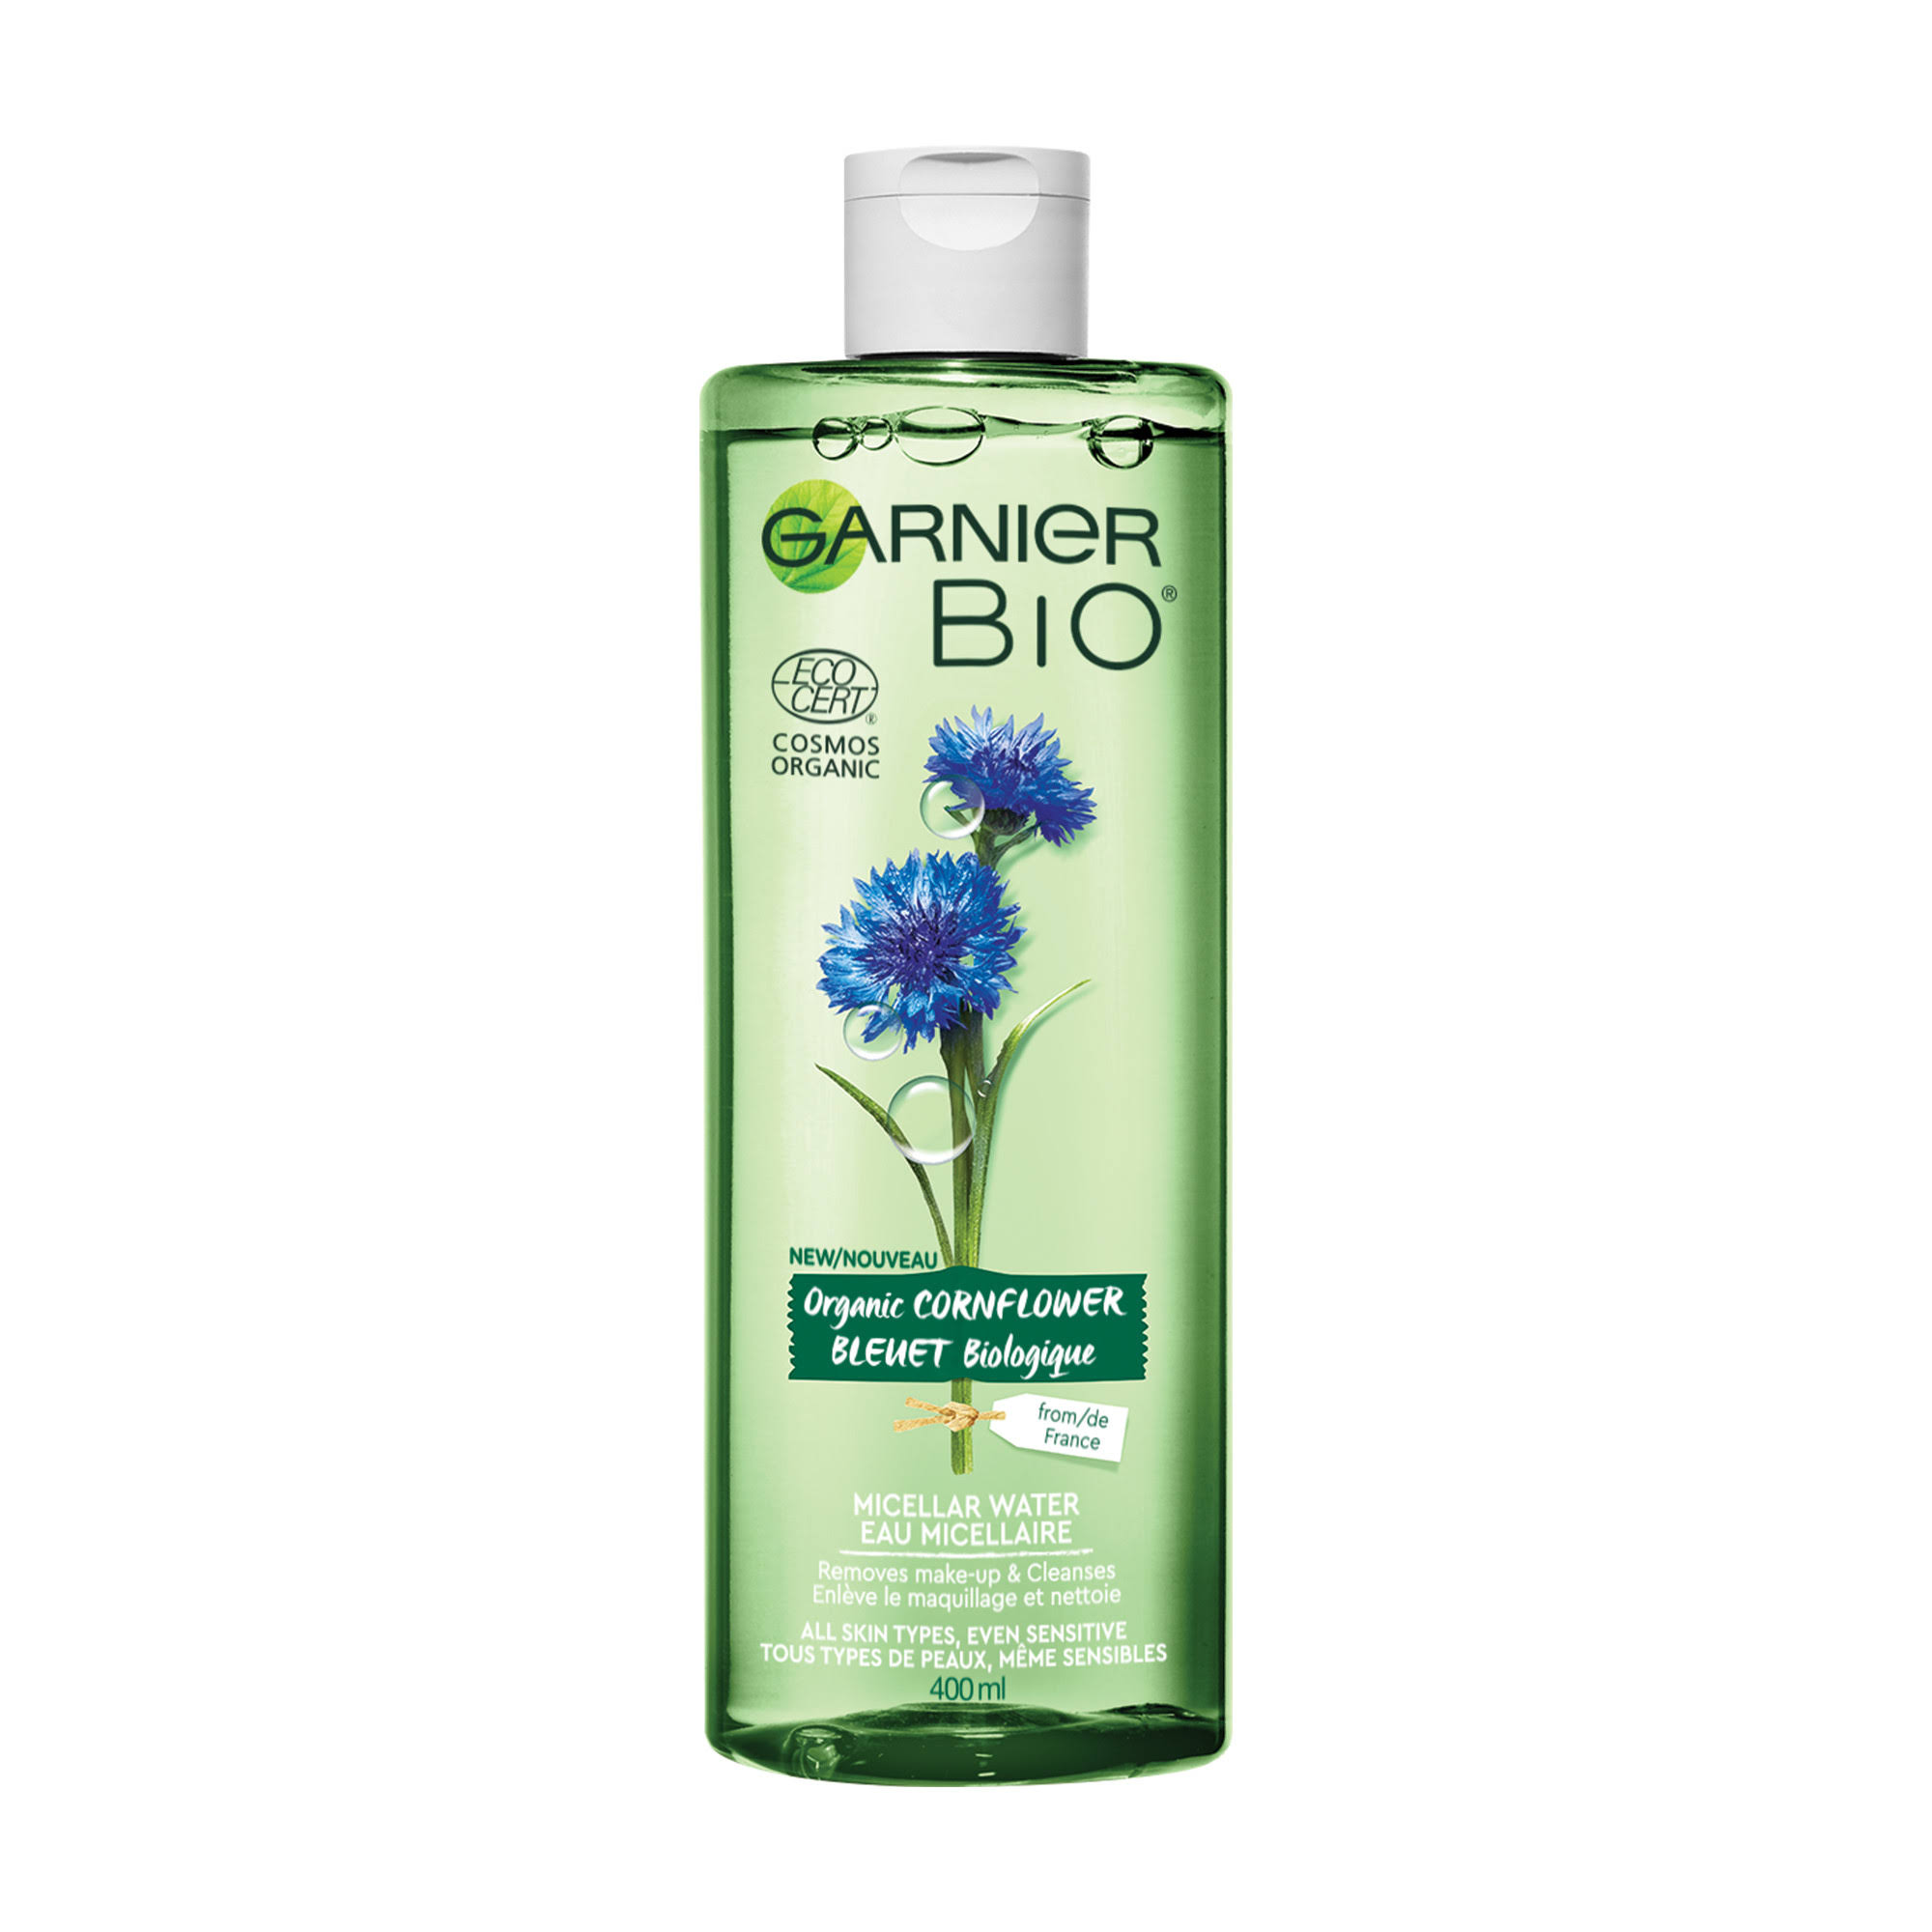 Garnier Bio Organic Cornflower Micellar Cleansing Water for All Skin Types